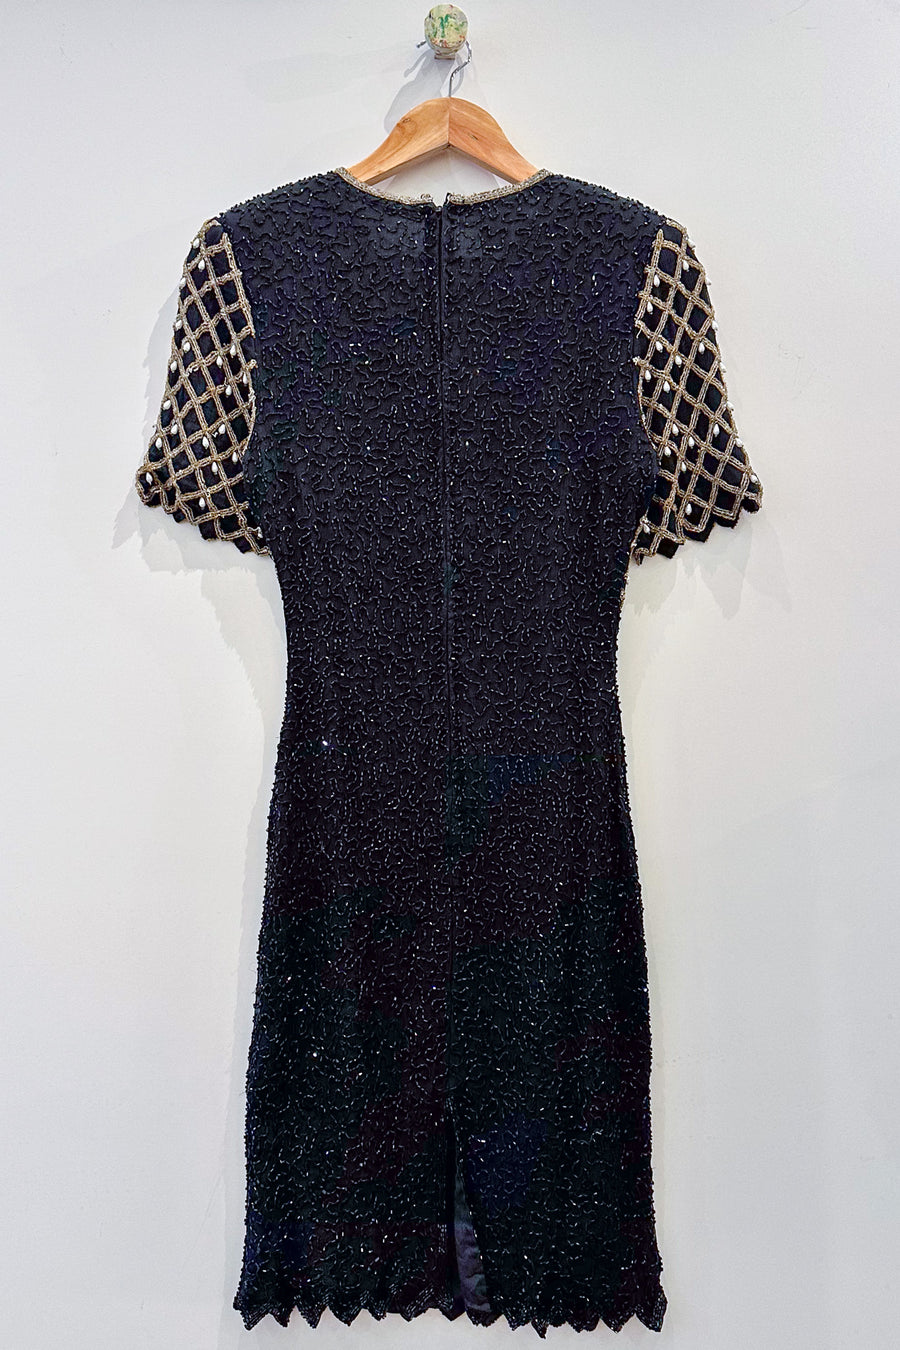 Vintage Black Beaded Evening Dress